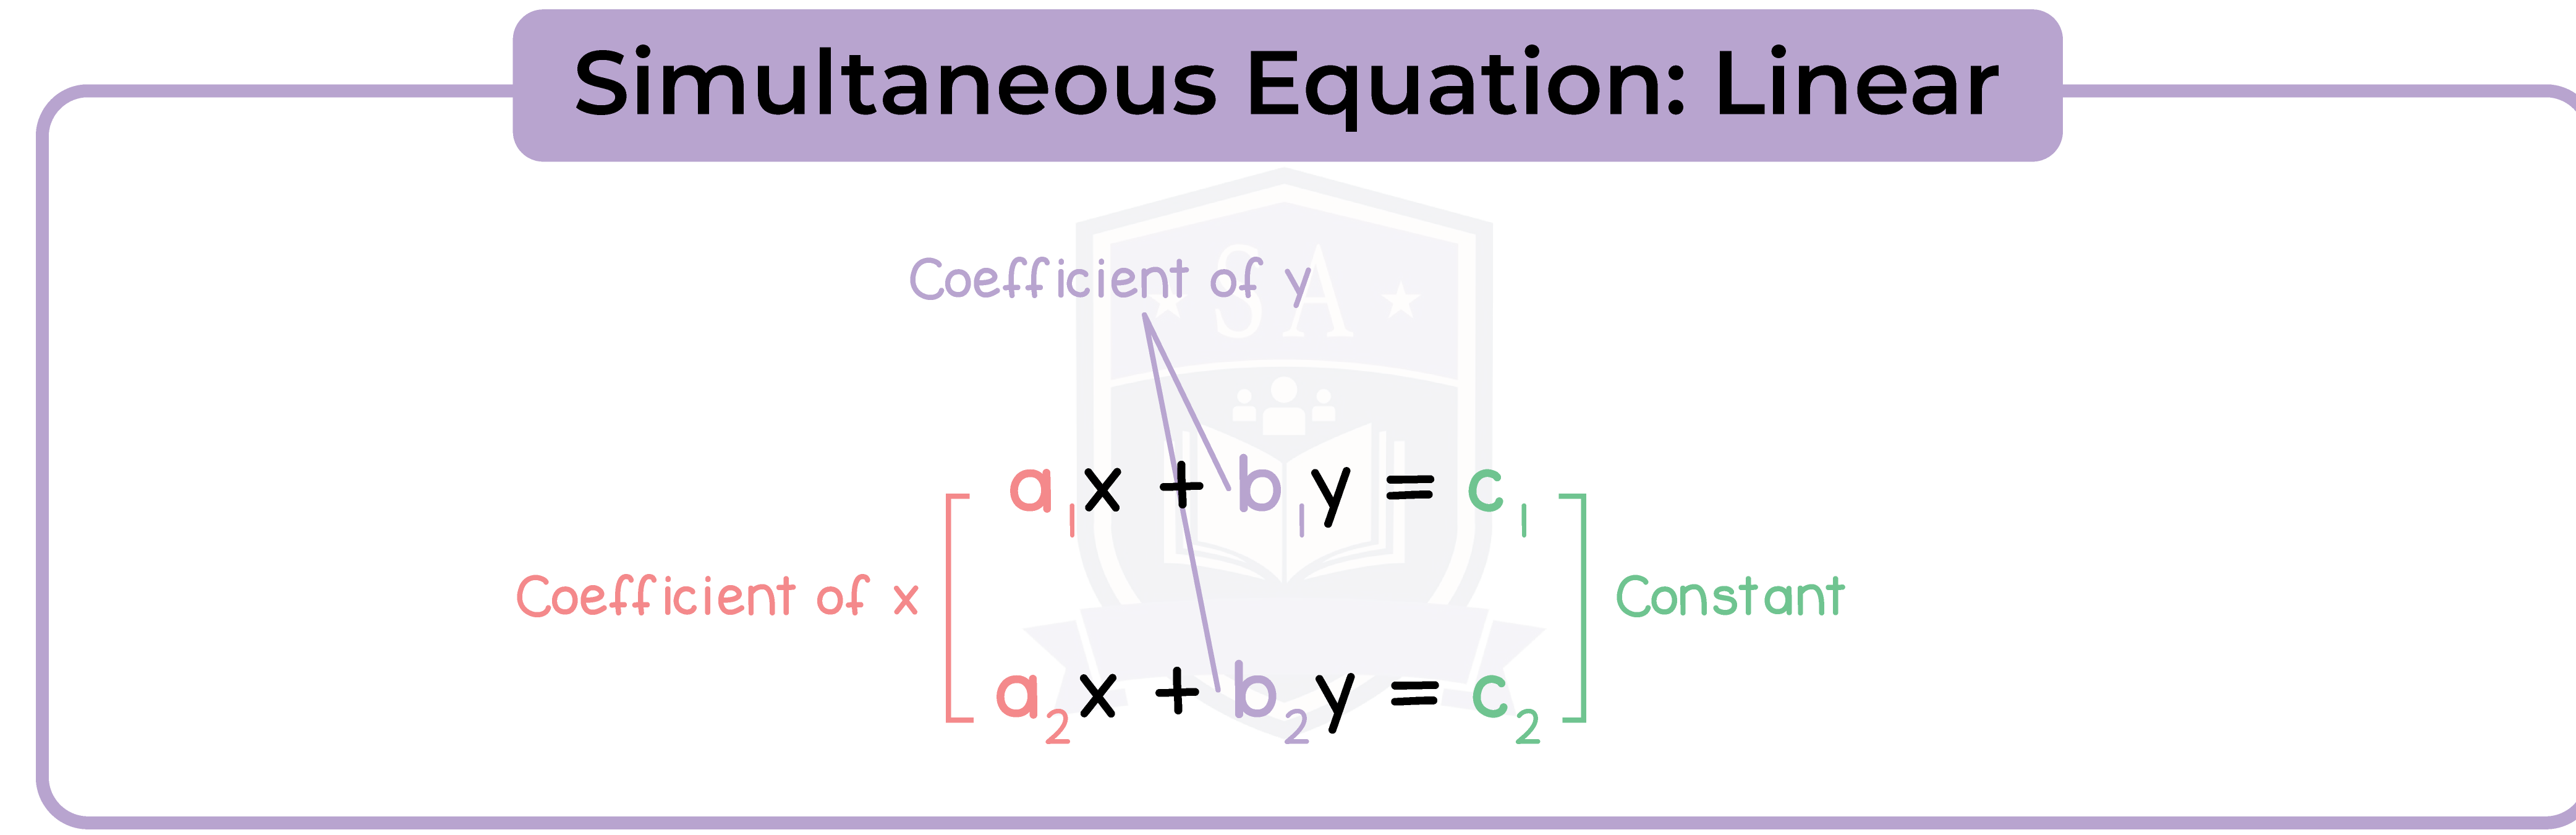 edexcel_igcse_mathematics a_topic 17_simultaneous equations_001_.SImultaneous Equation: Linear